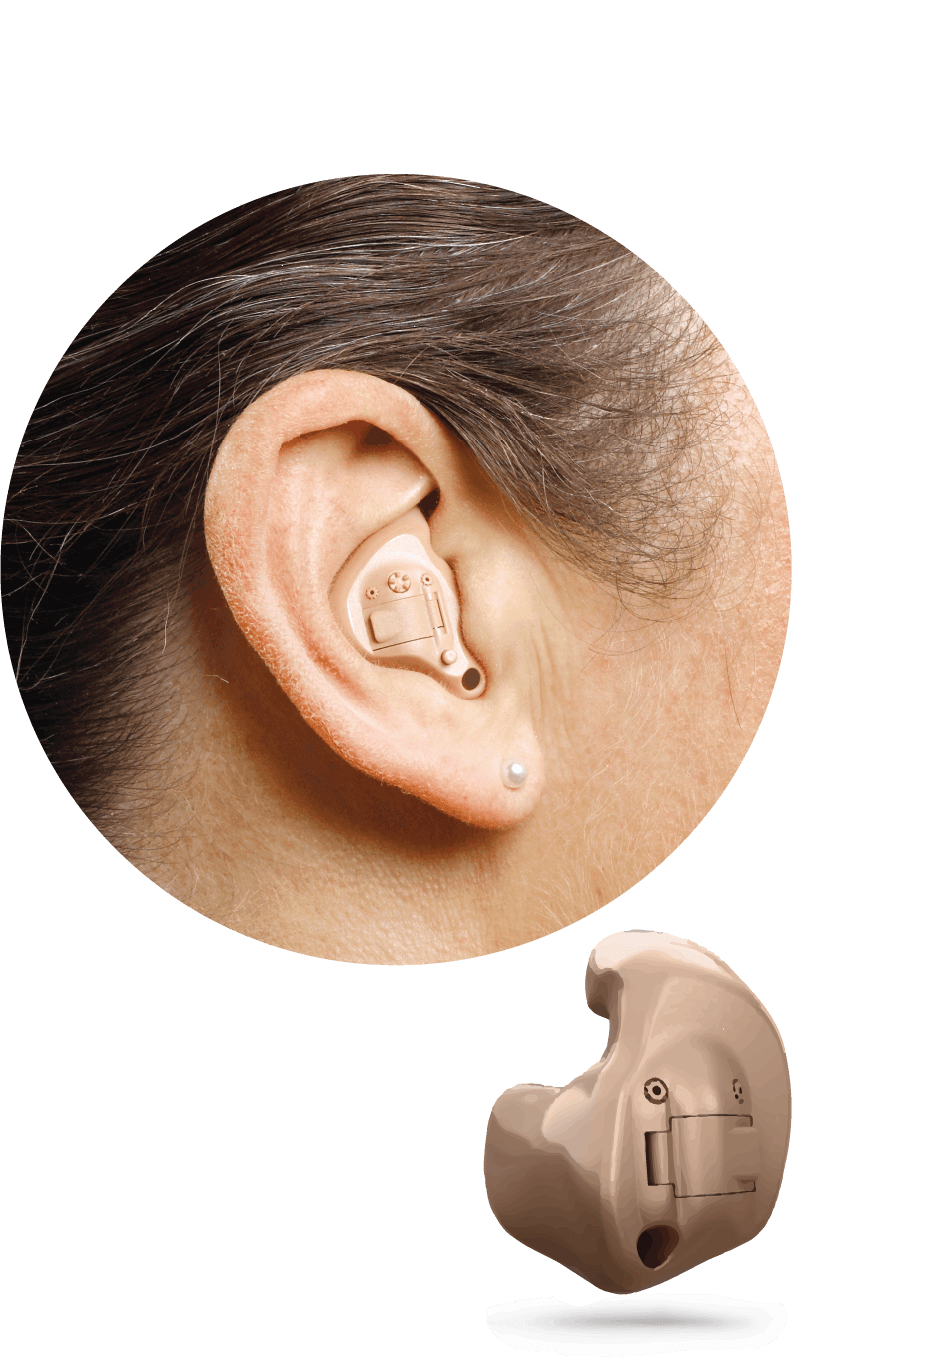 Конха слуховой аппарат. Внутриушной слуховой аппарат Phonak. Внутриушные слуховые аппараты (ite). Аппарат слуховой внутриушной конха.